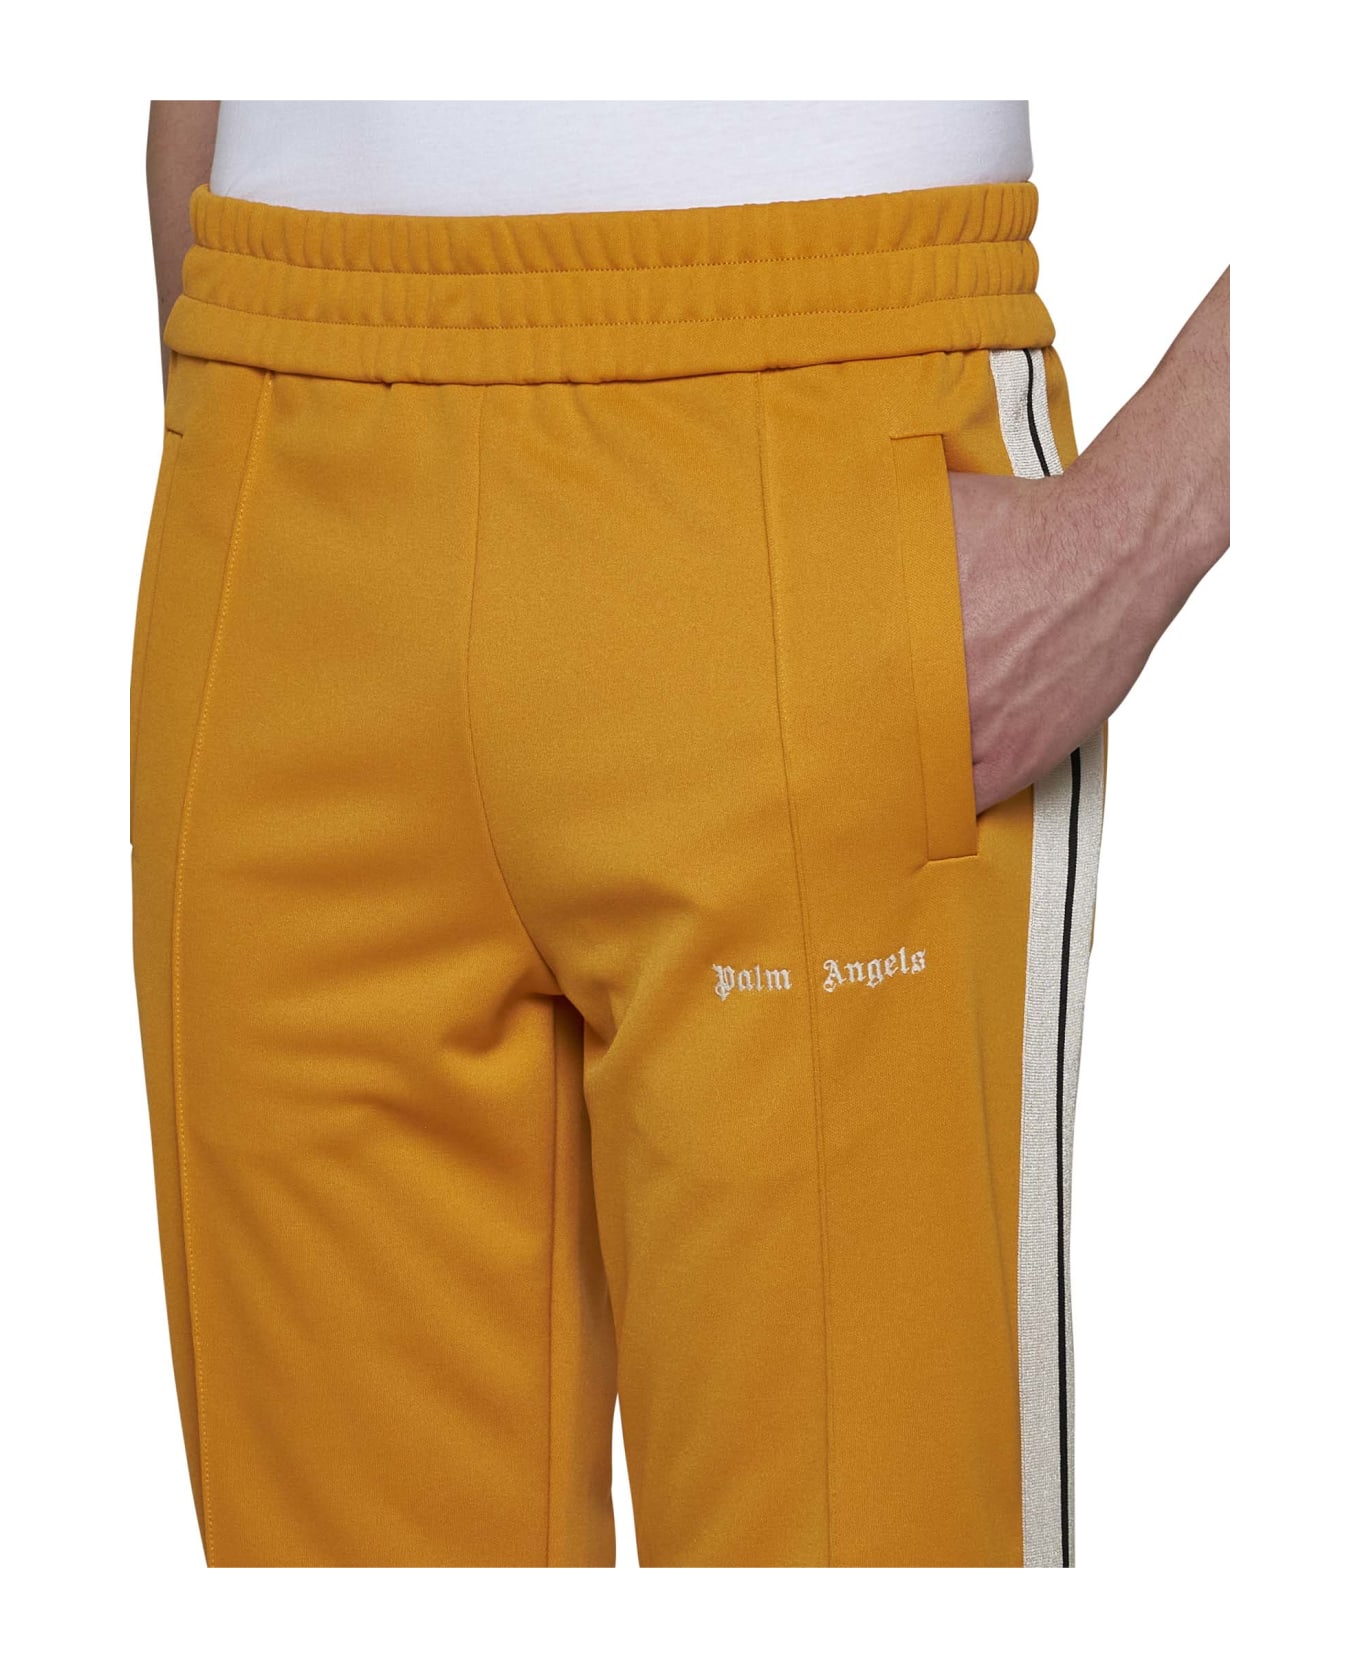 Palm Angels Trouser - Orange ボトムス